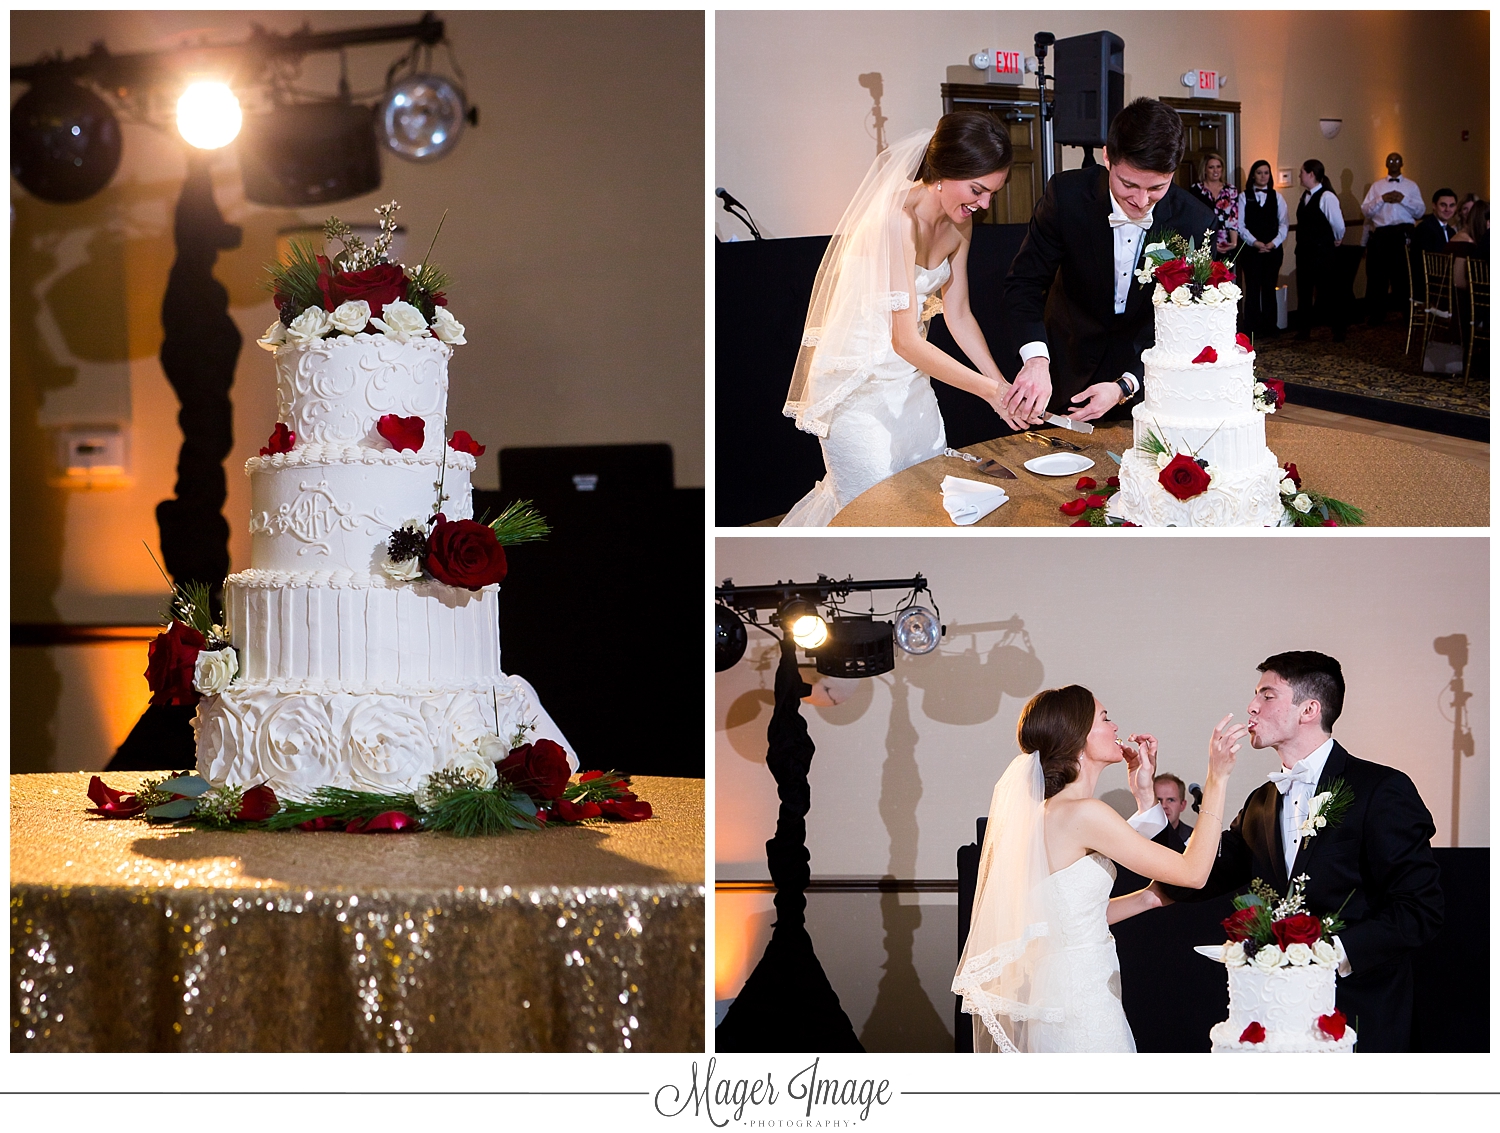 CAKES BY LORI WEDDING CAKE CHAMPAIGN ILLINOIS